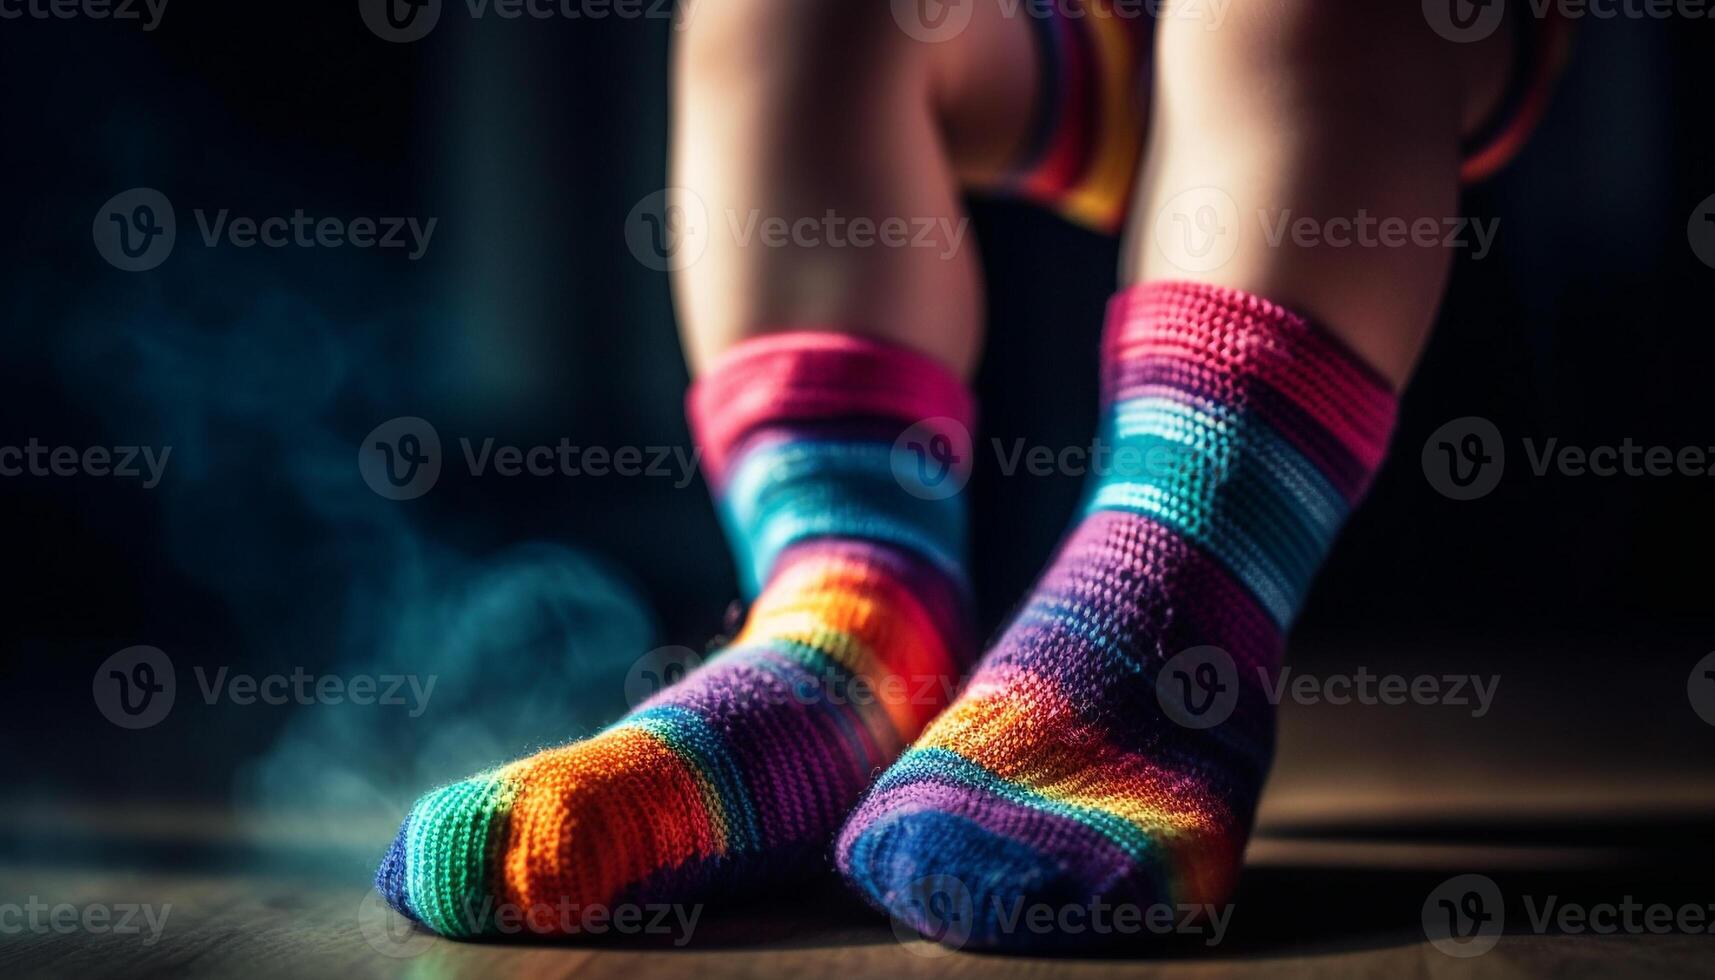 Cozy woolen socks warm up human feet on winter nights generated by AI photo